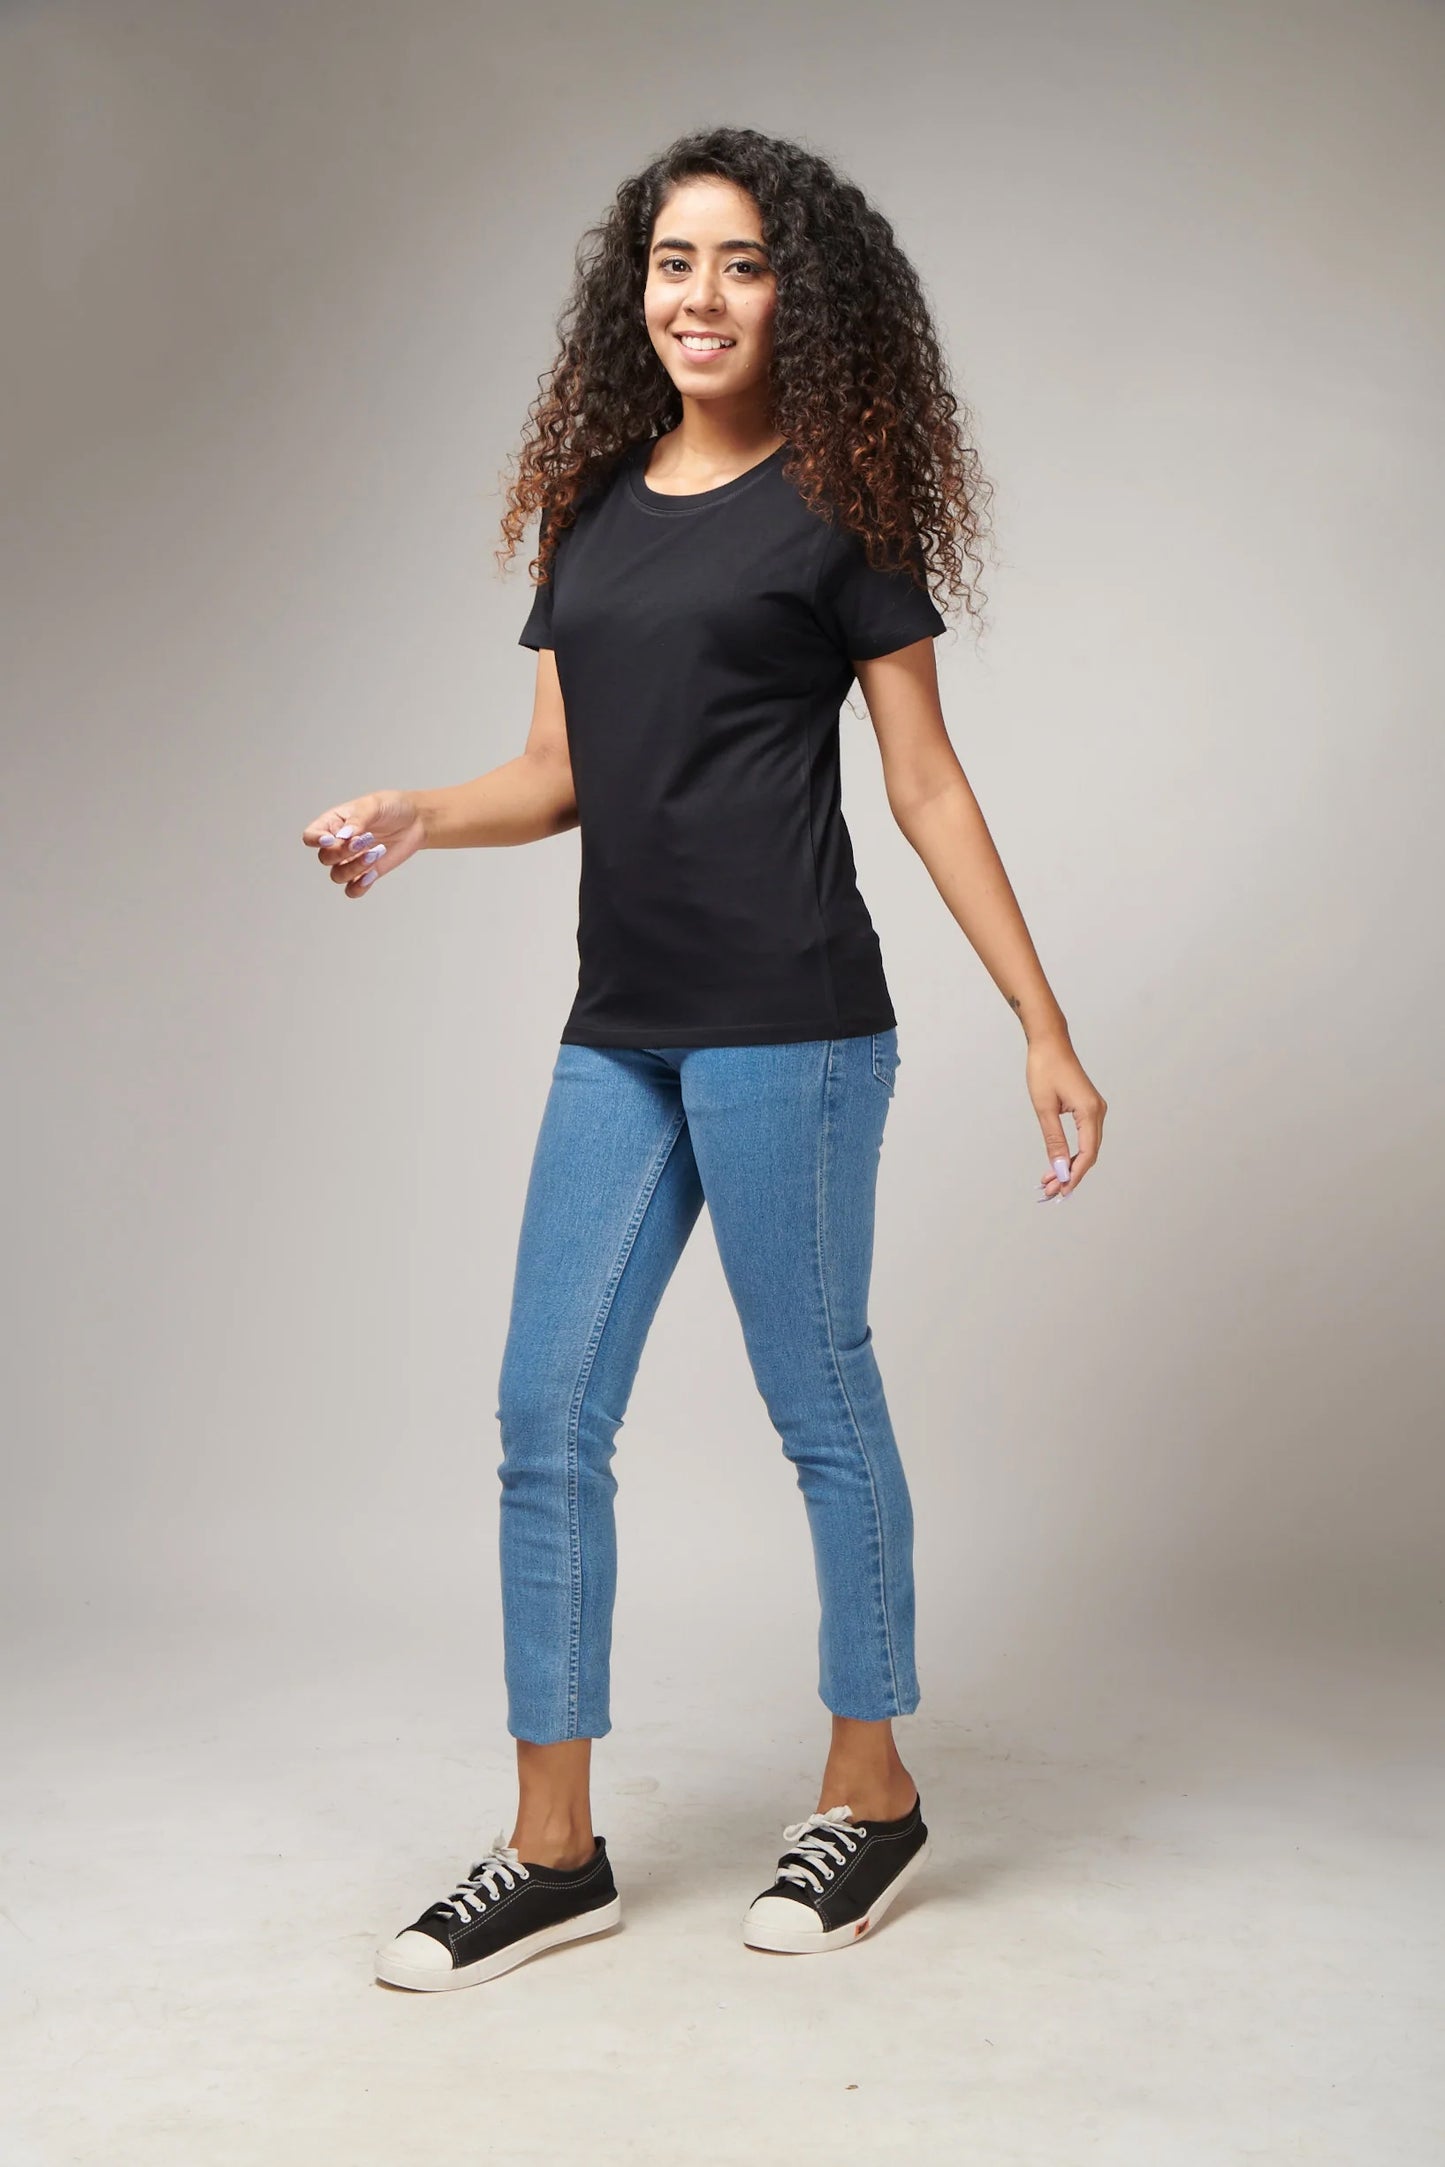 Women's Basic Black Half Sleeves T-Shirt